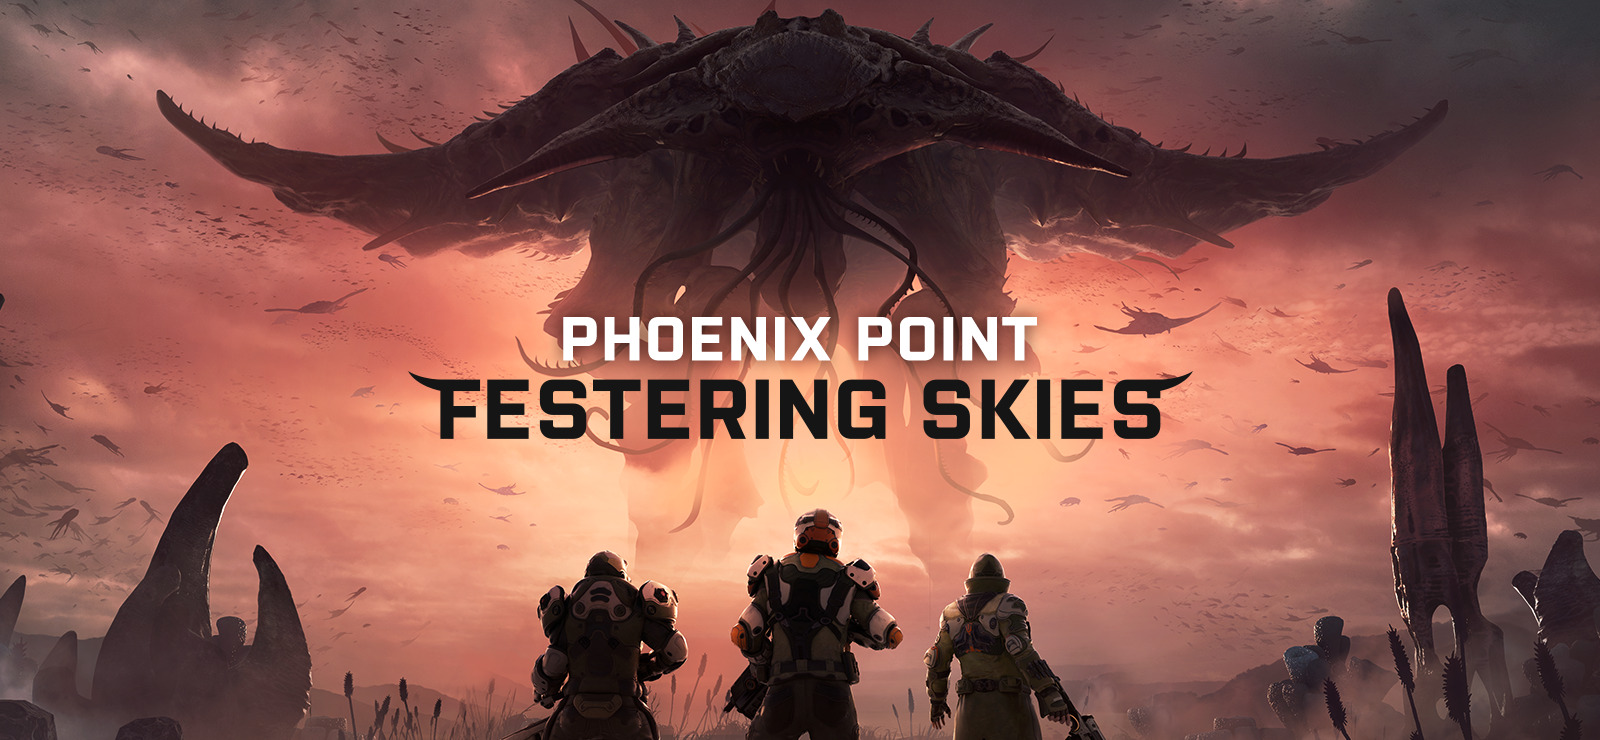 free download phoenix point xbox